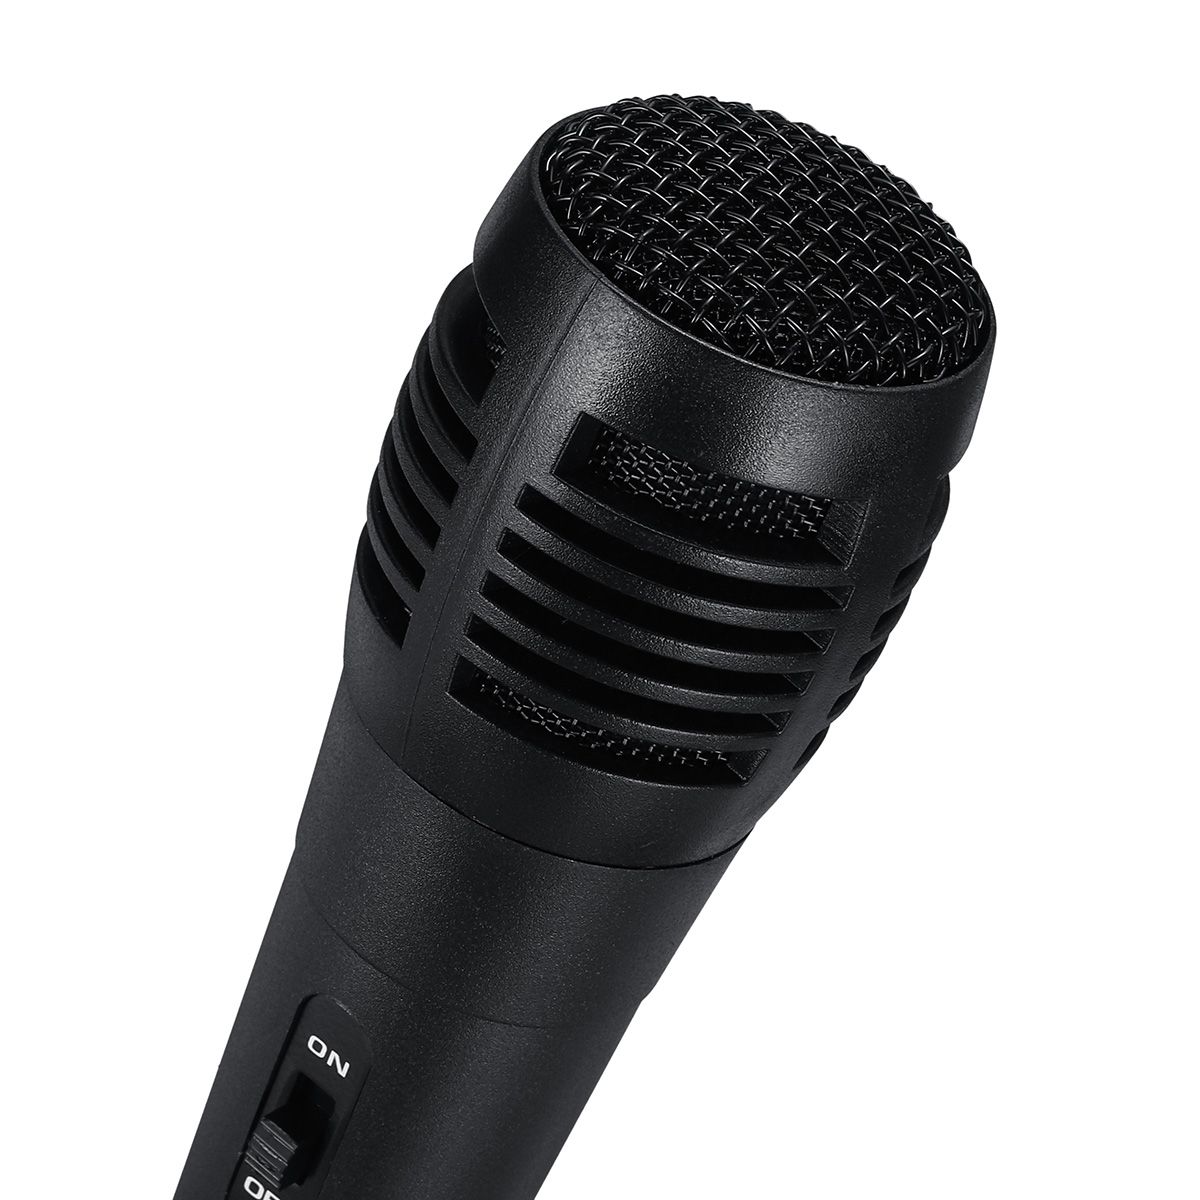 2Pcs-PM-183-65MM-Handheld-Wired-Dynamic-Karaoke-Microphone-1413693